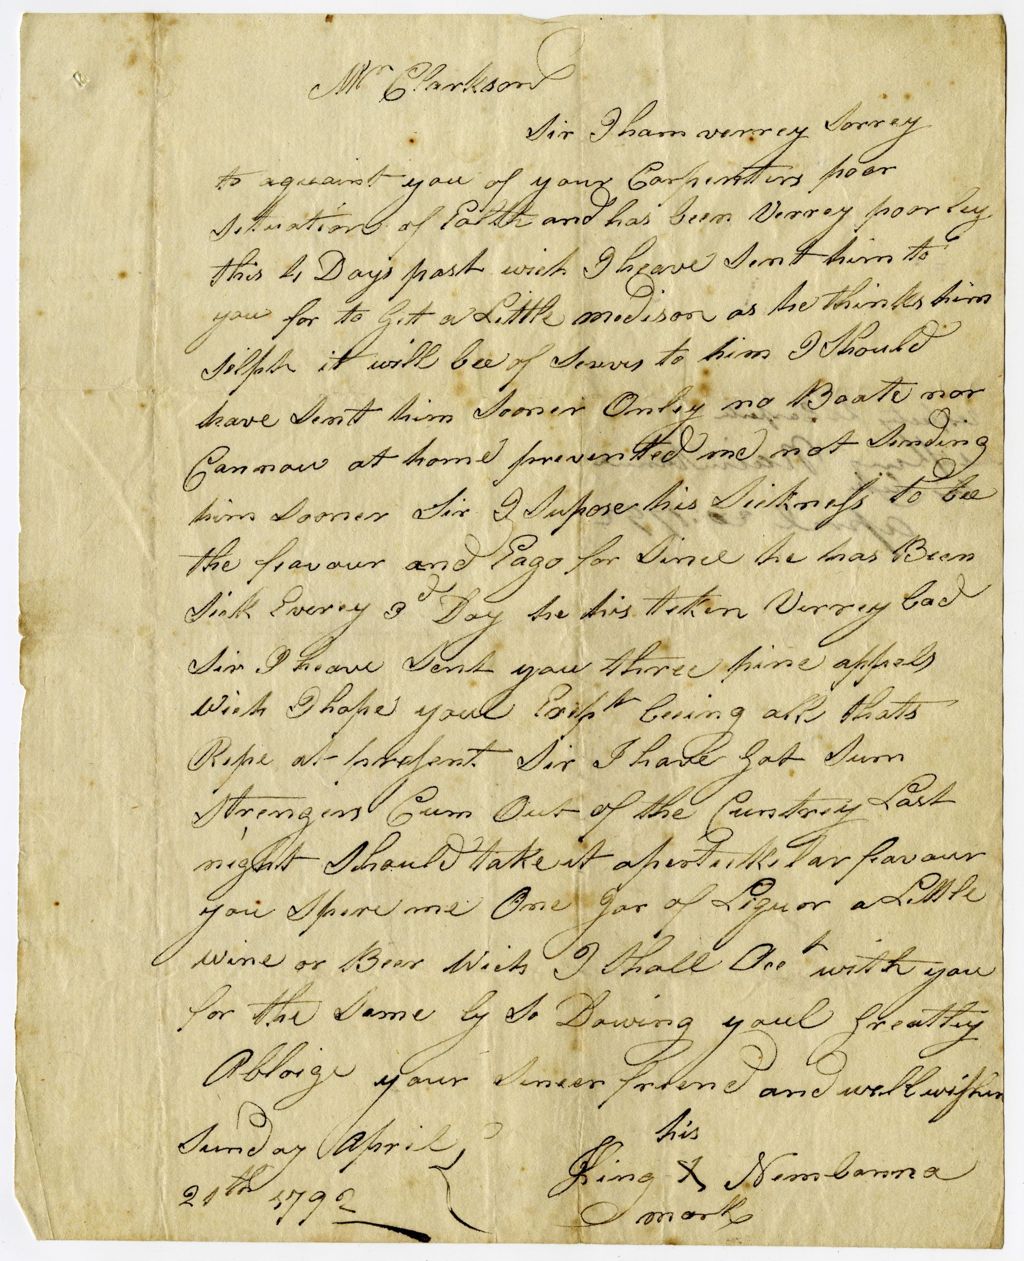 Letter from King Naimbanna to John Clarkson, April 20, 1792